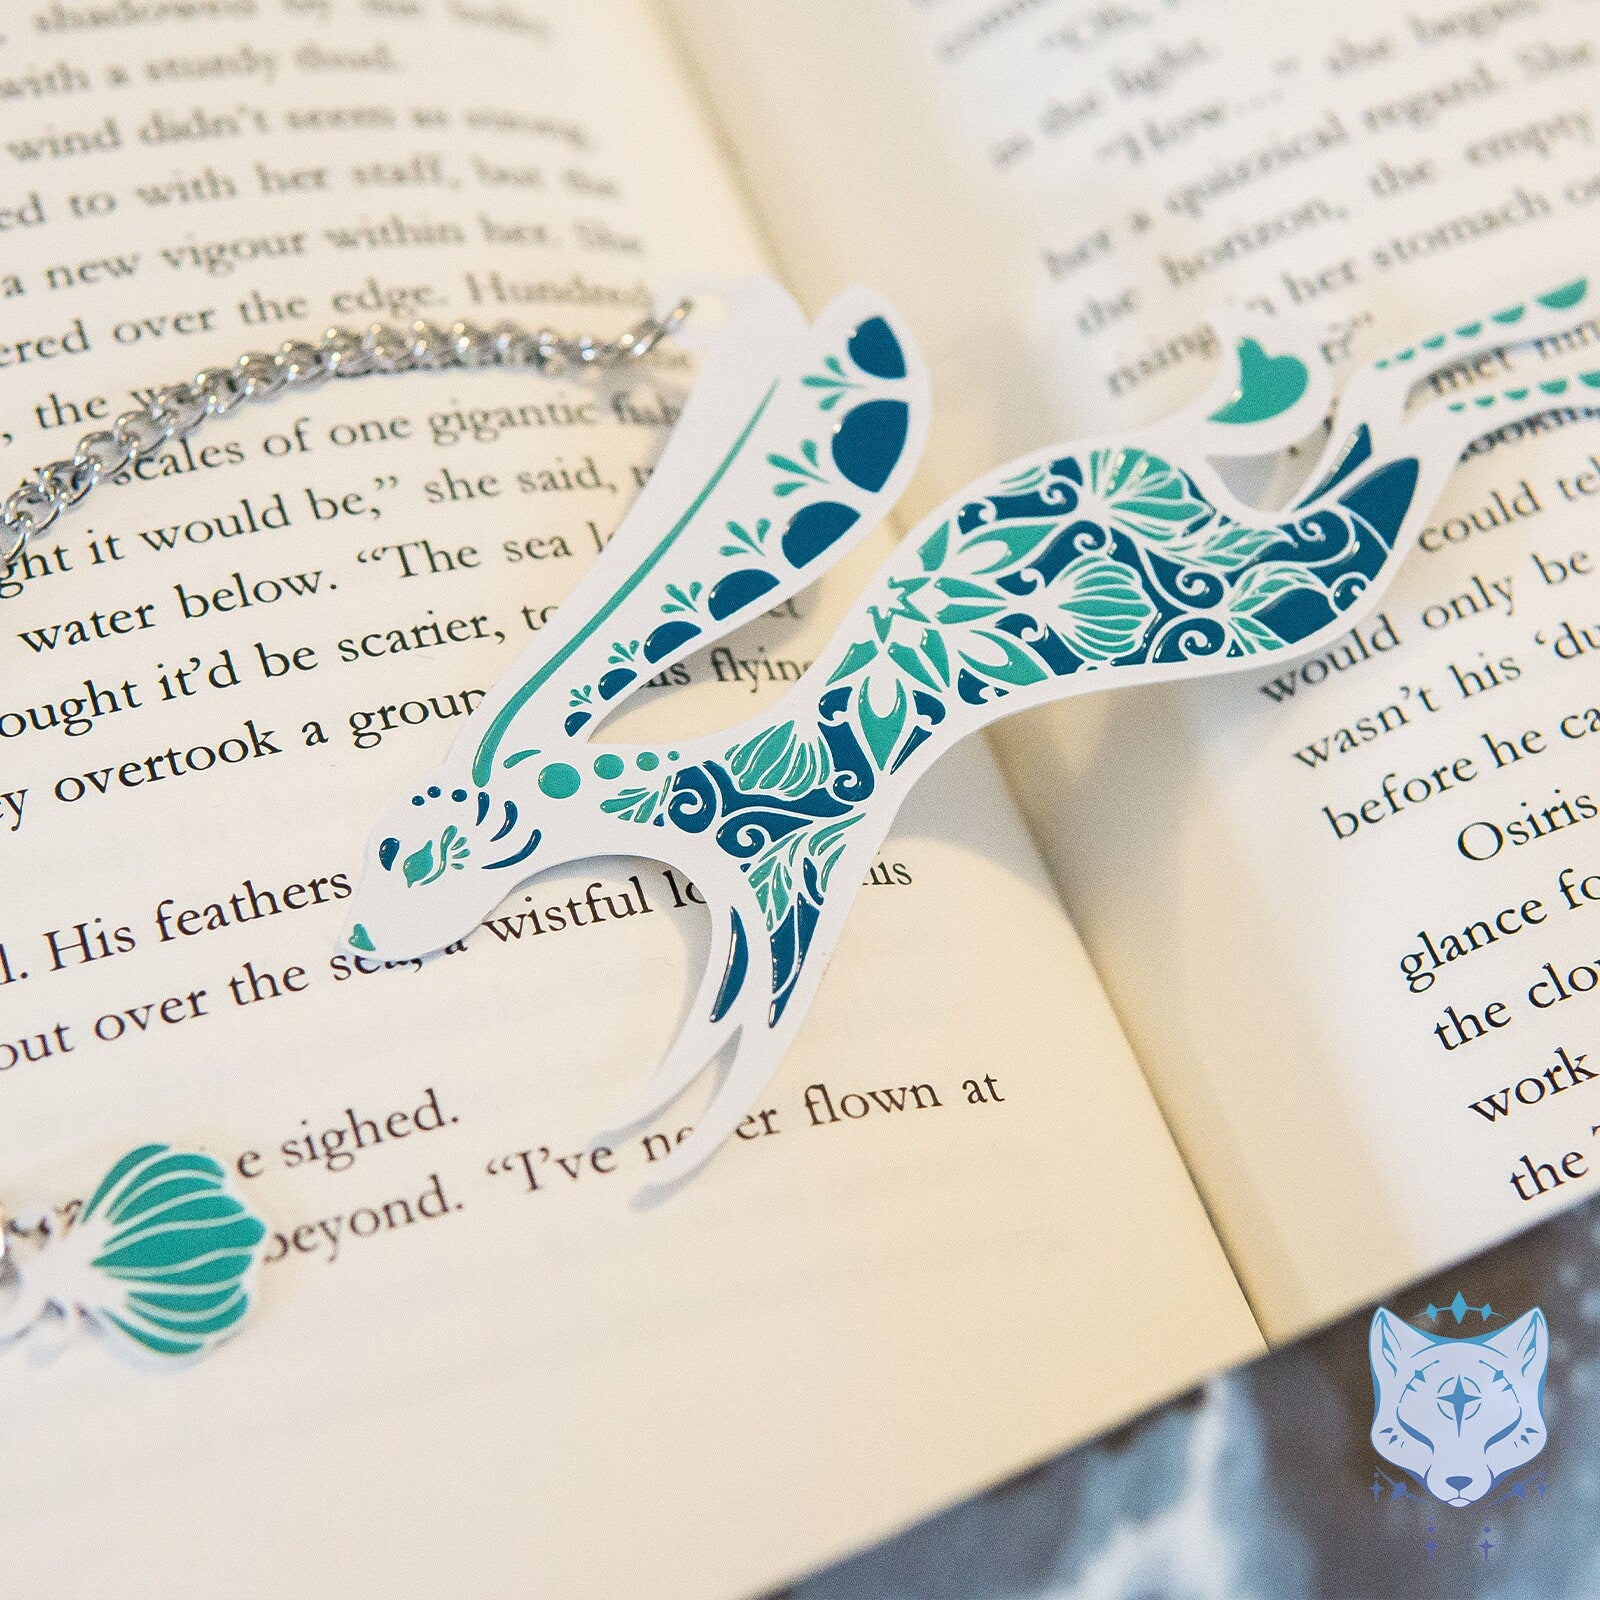 Floral Jade Rabbit Metal Bookmark - 3.75 inch Metal Bookmark, Book Accessories, Book Lovers Gift